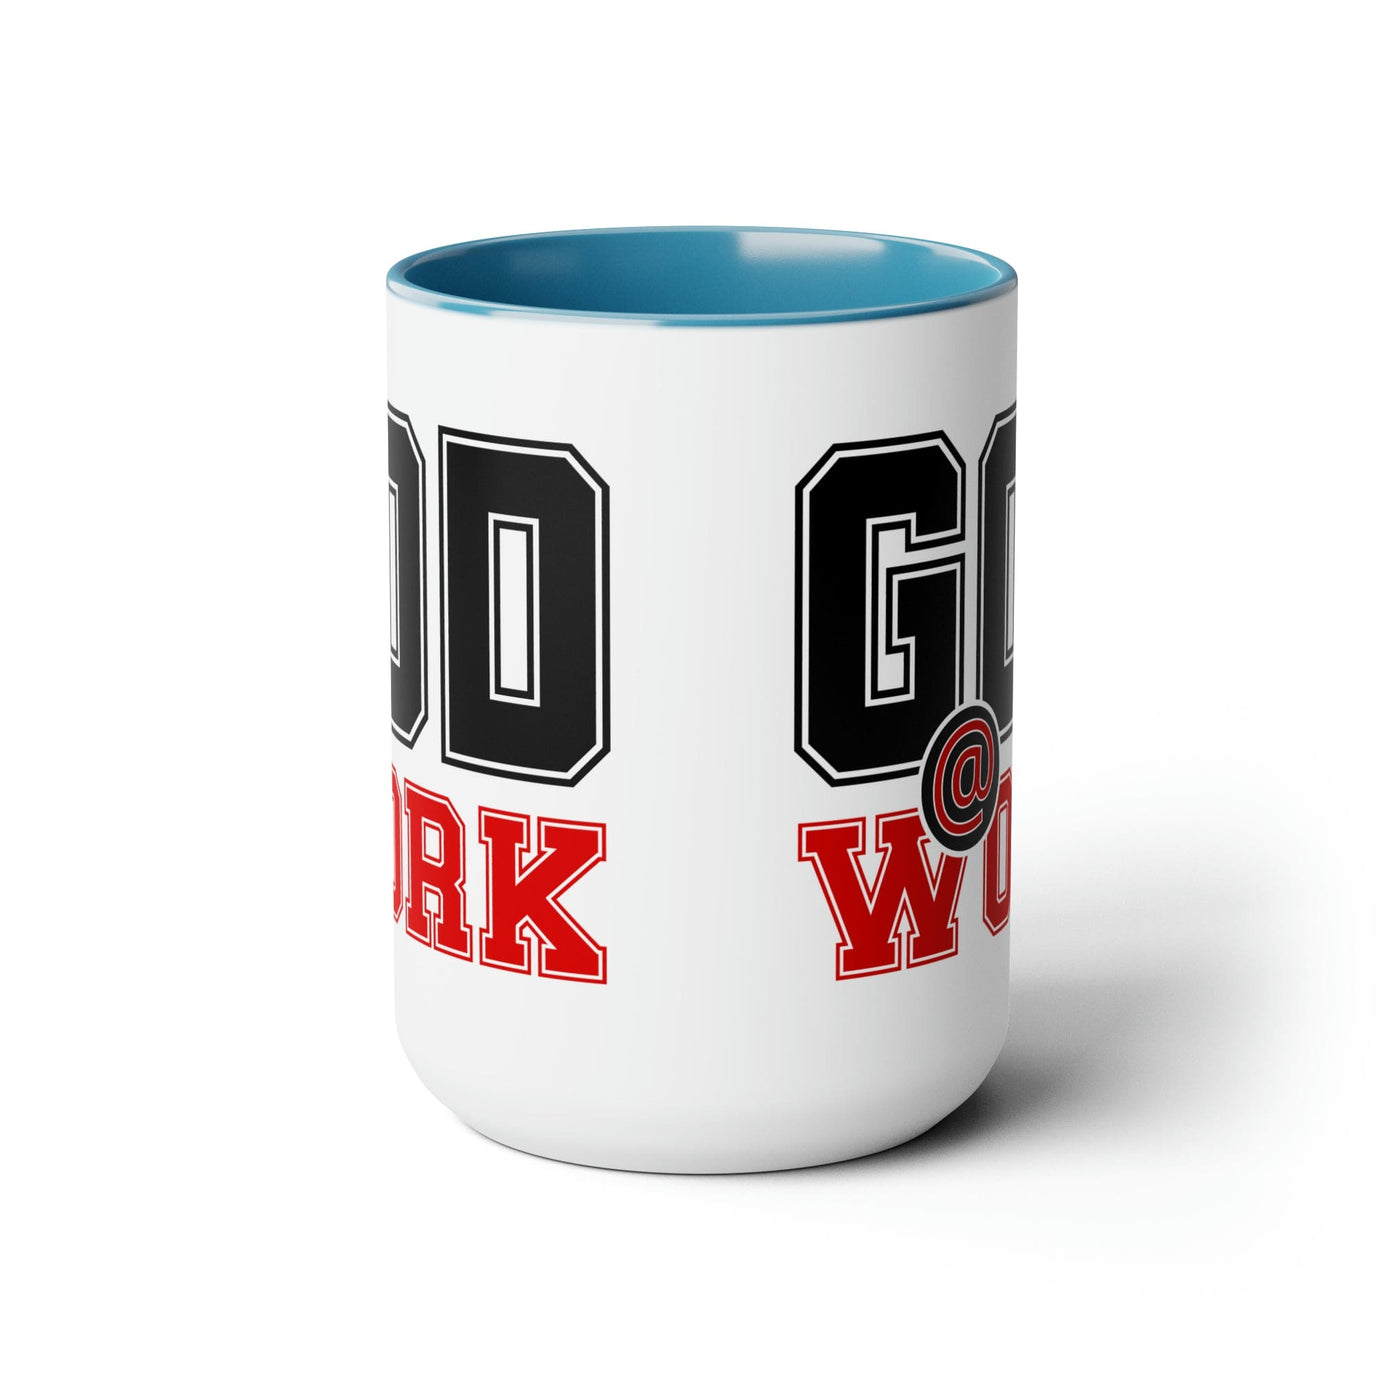 Accent Ceramic Coffee Mug 15oz - God @ Work Black And Red Print - Decorative |